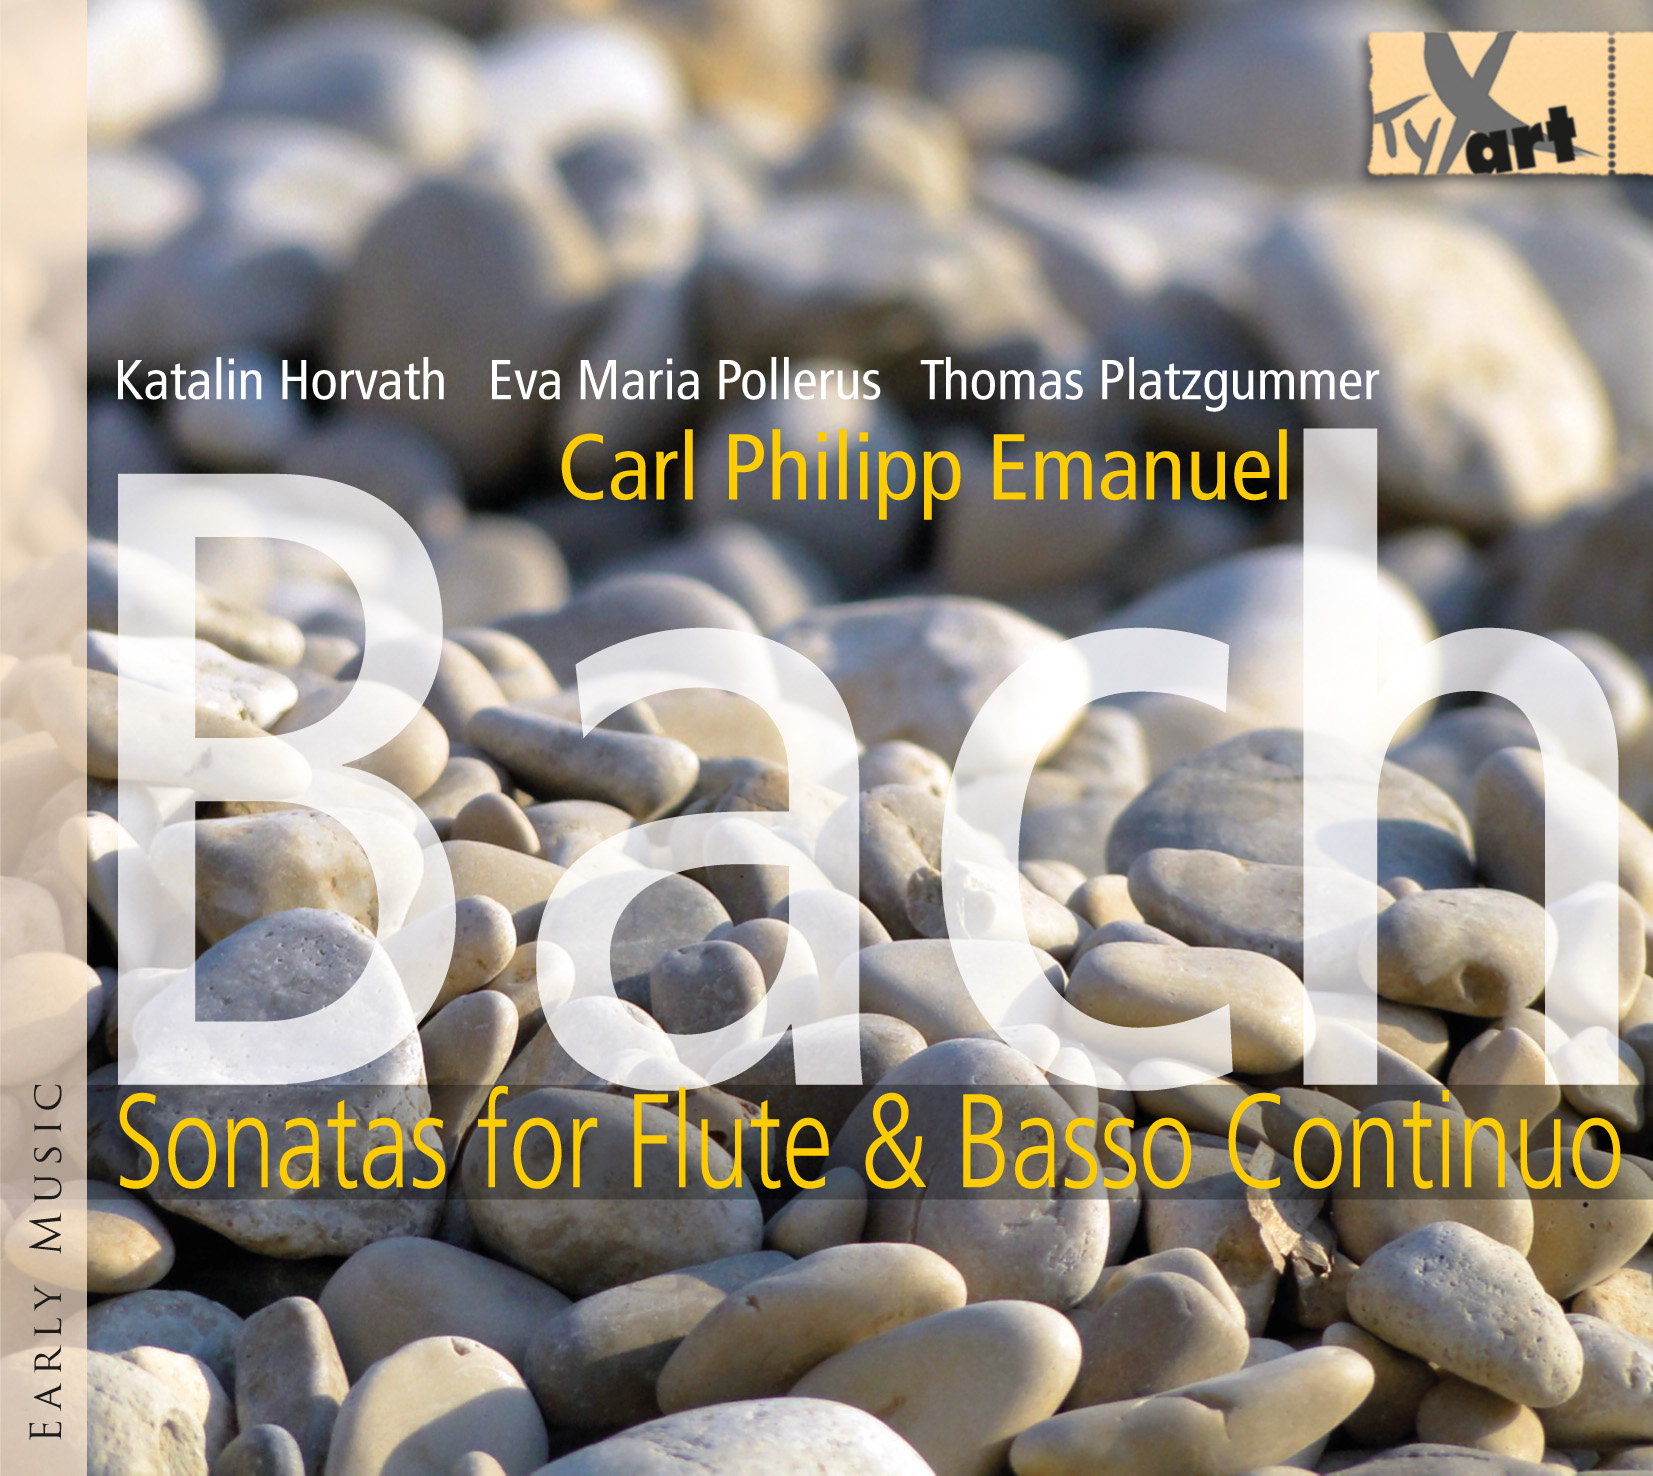 Carl Philipp Emanuel Bach: Sonatas for Flute & Basso Continuo